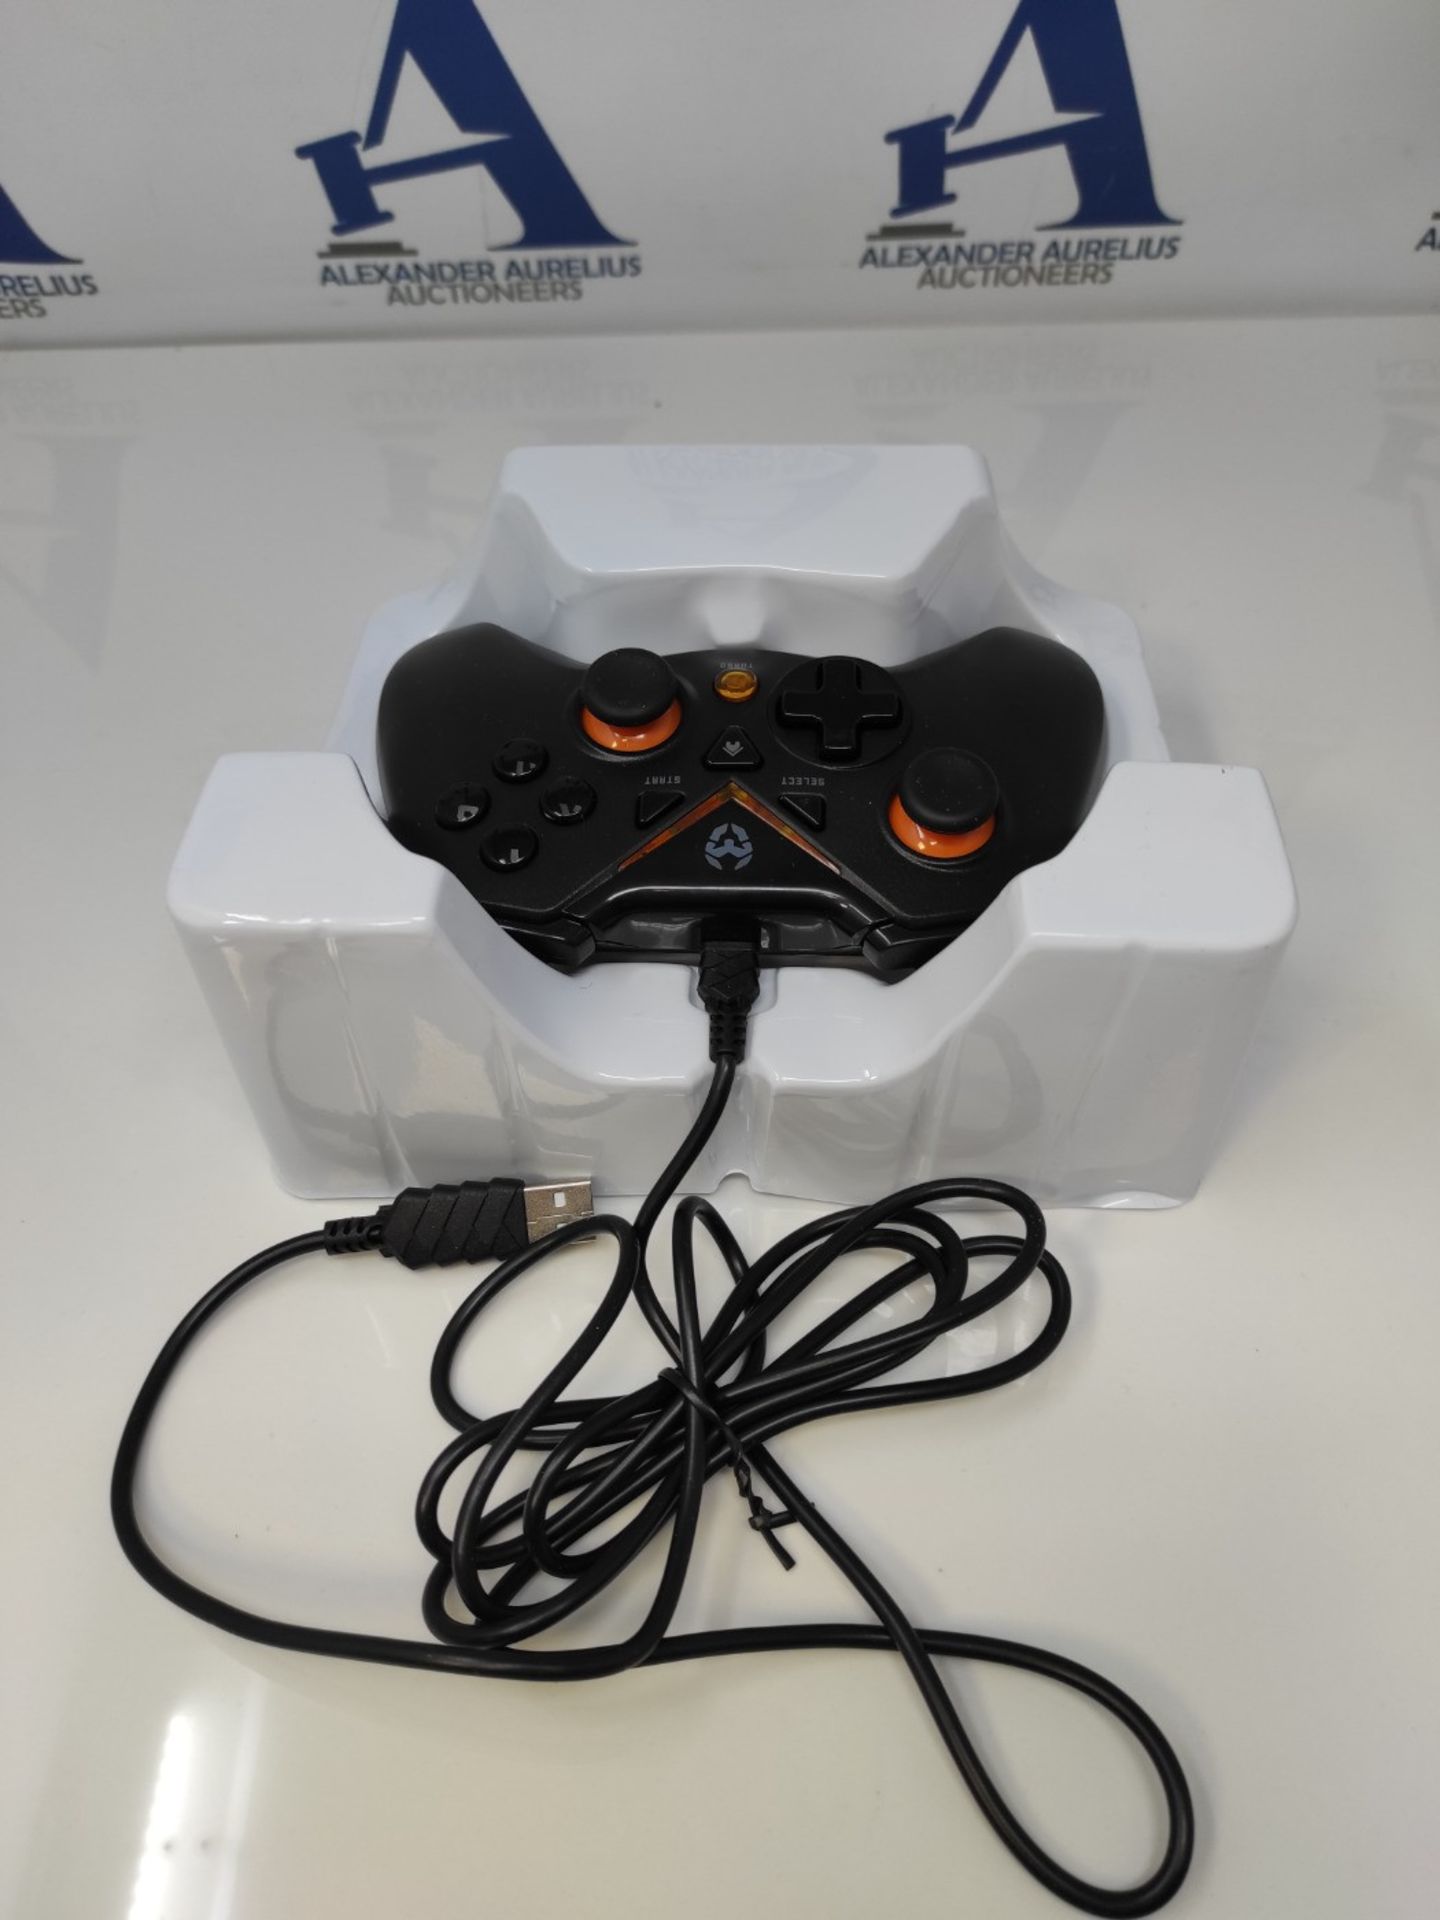 KROM Gamepad KEY - NXKROMKEY - Wired gamepad, X-input and Direct-input, analog joystic - Image 3 of 3